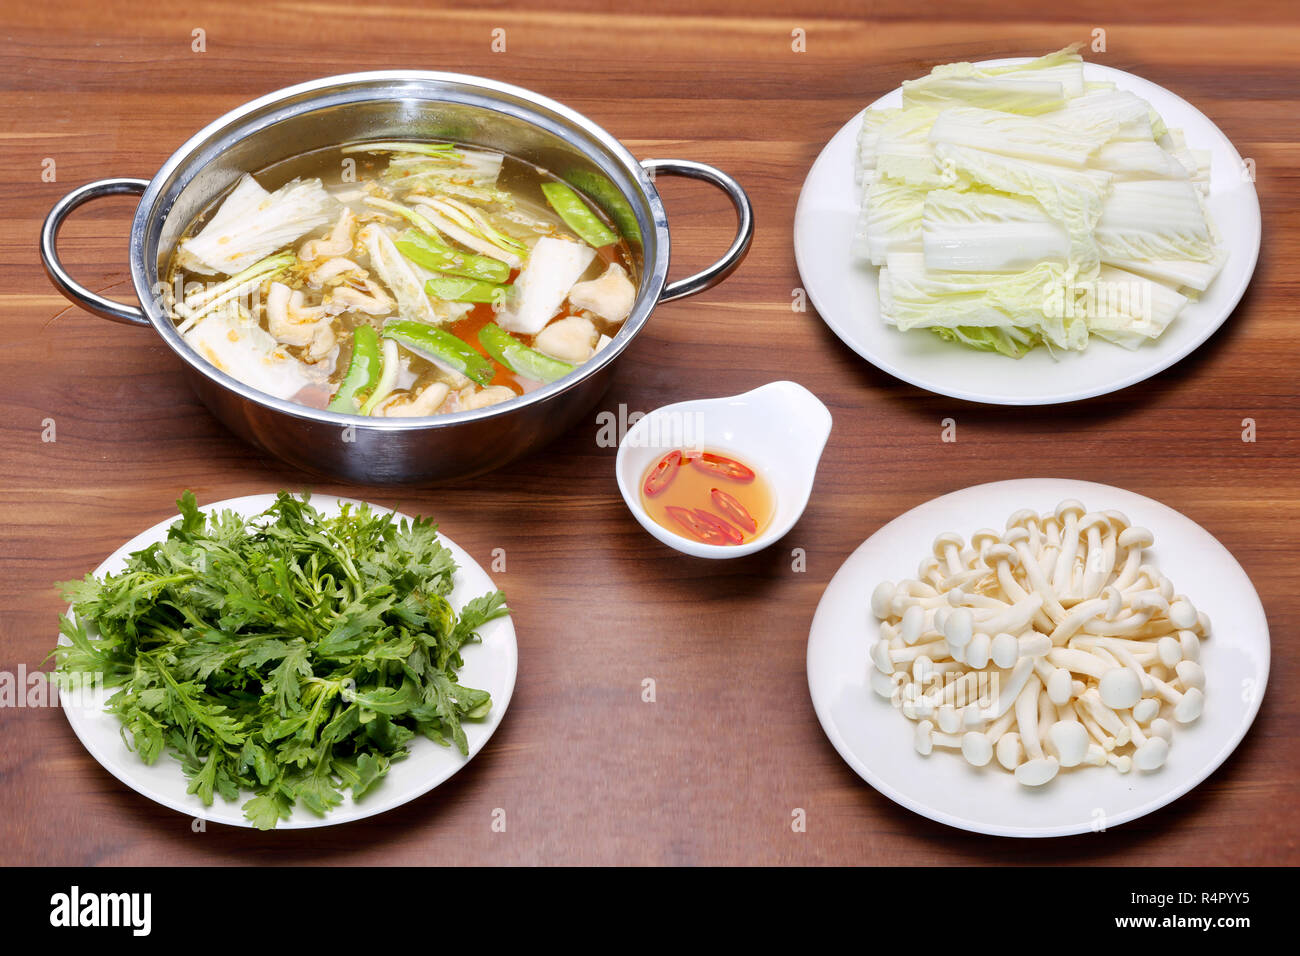 https://c8.alamy.com/comp/R4PYY5/prepared-hot-pot-of-seafood-in-vietnamese-style-with-mushroom-fish-sauce-R4PYY5.jpg